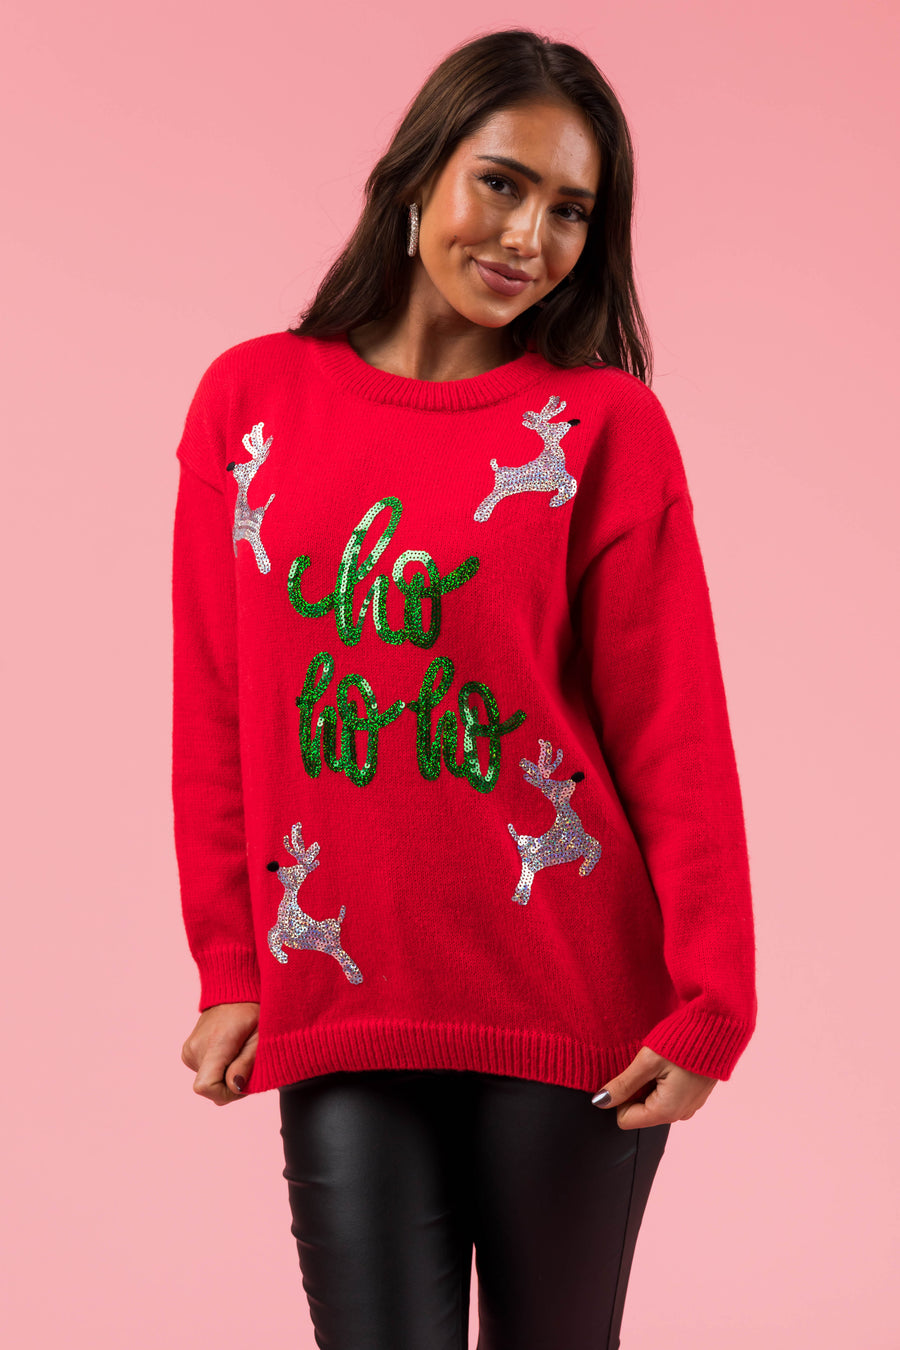 Lipstick Sequin 'Ho Ho Ho' Christmas Sweater